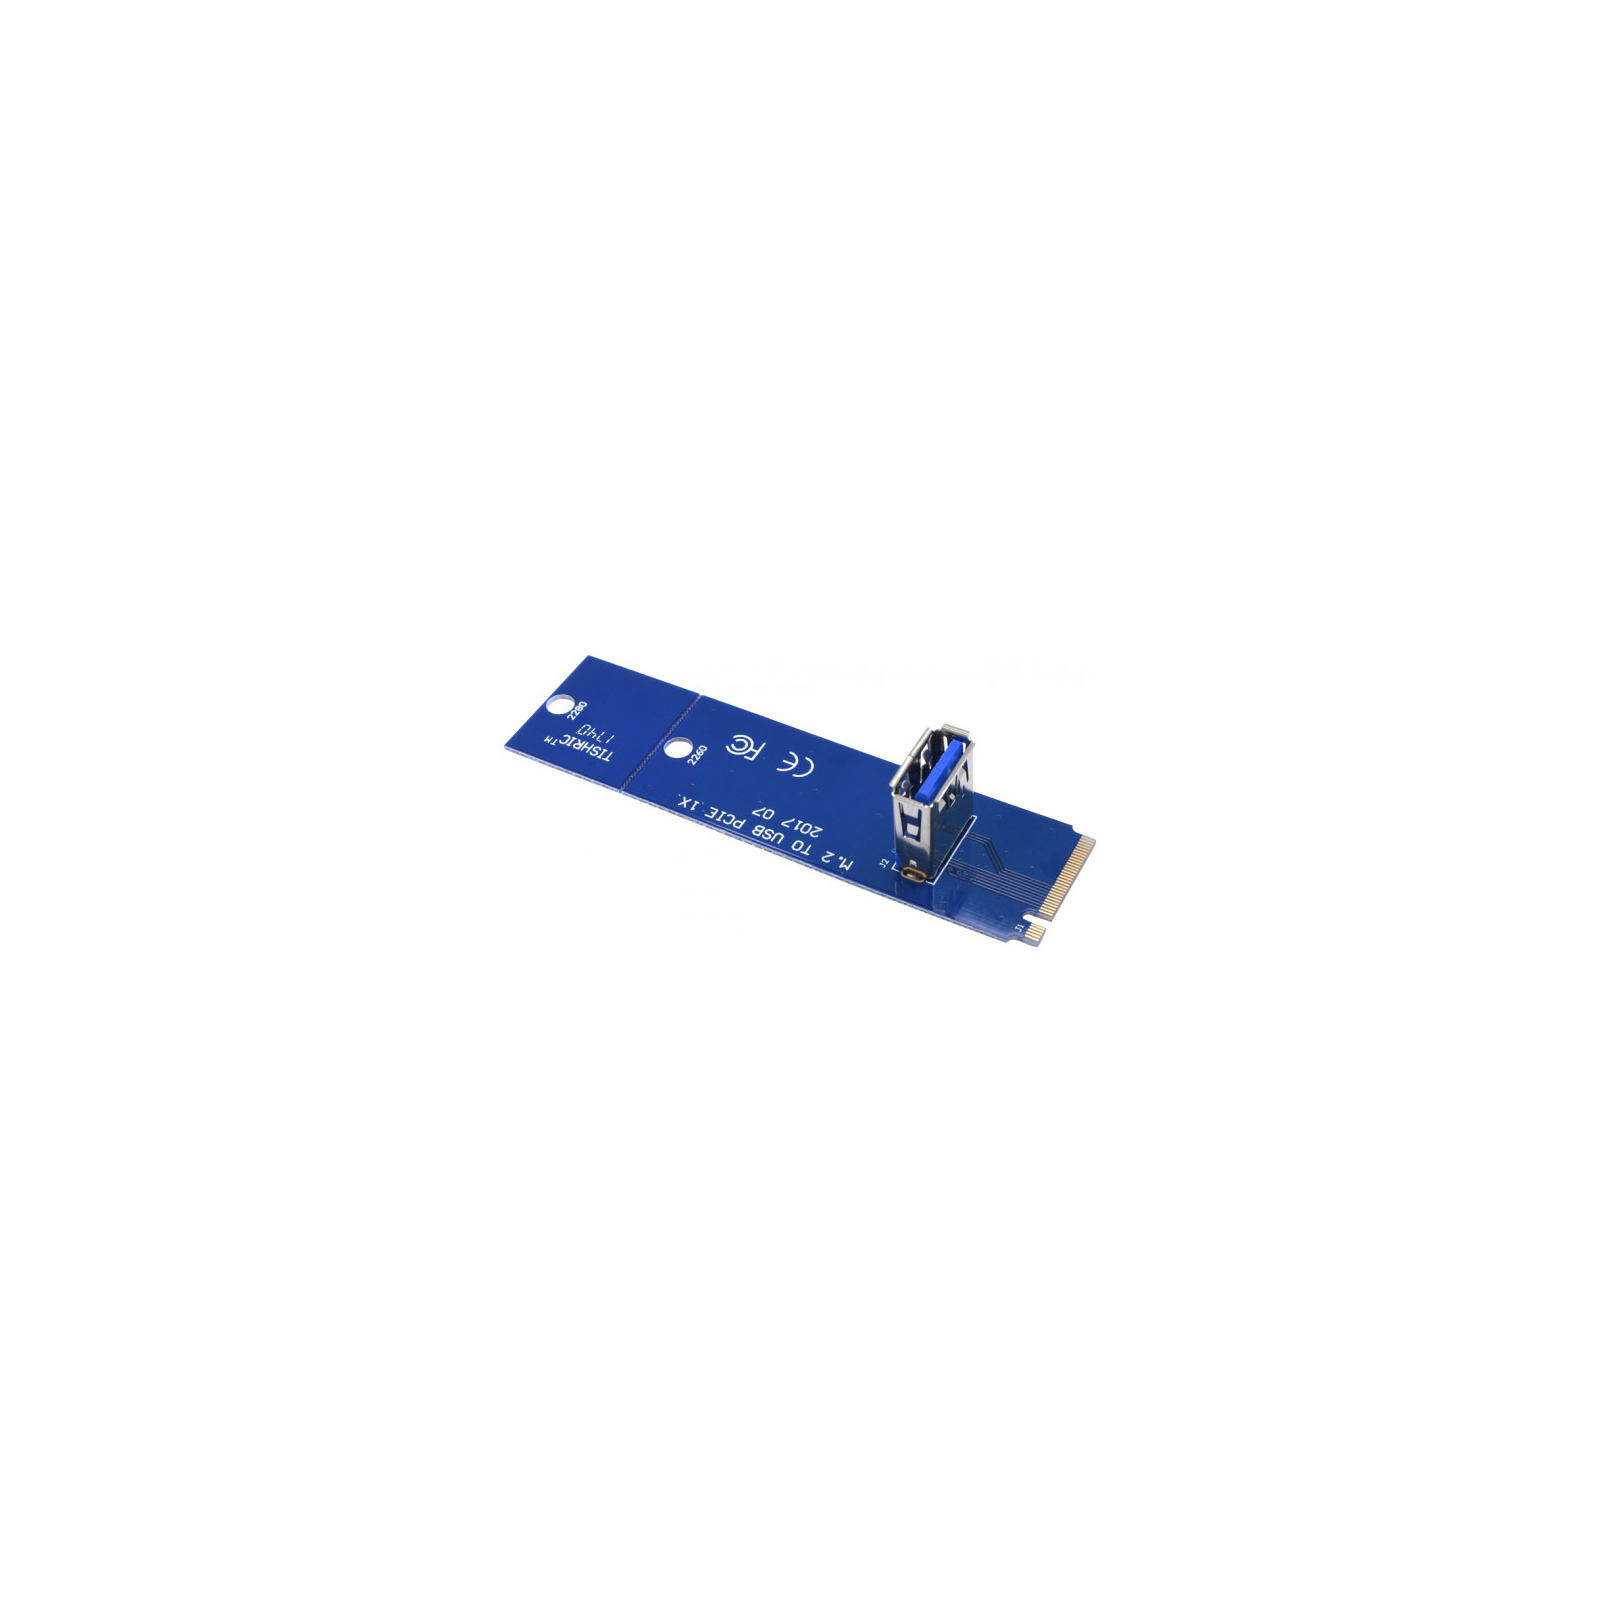 Райзер Dynamode NGFF M.2 Male to USB 3.0 Female для PCI-E 1X (RX-riser-M.2-USB3.0-PCI-E) зображення 2